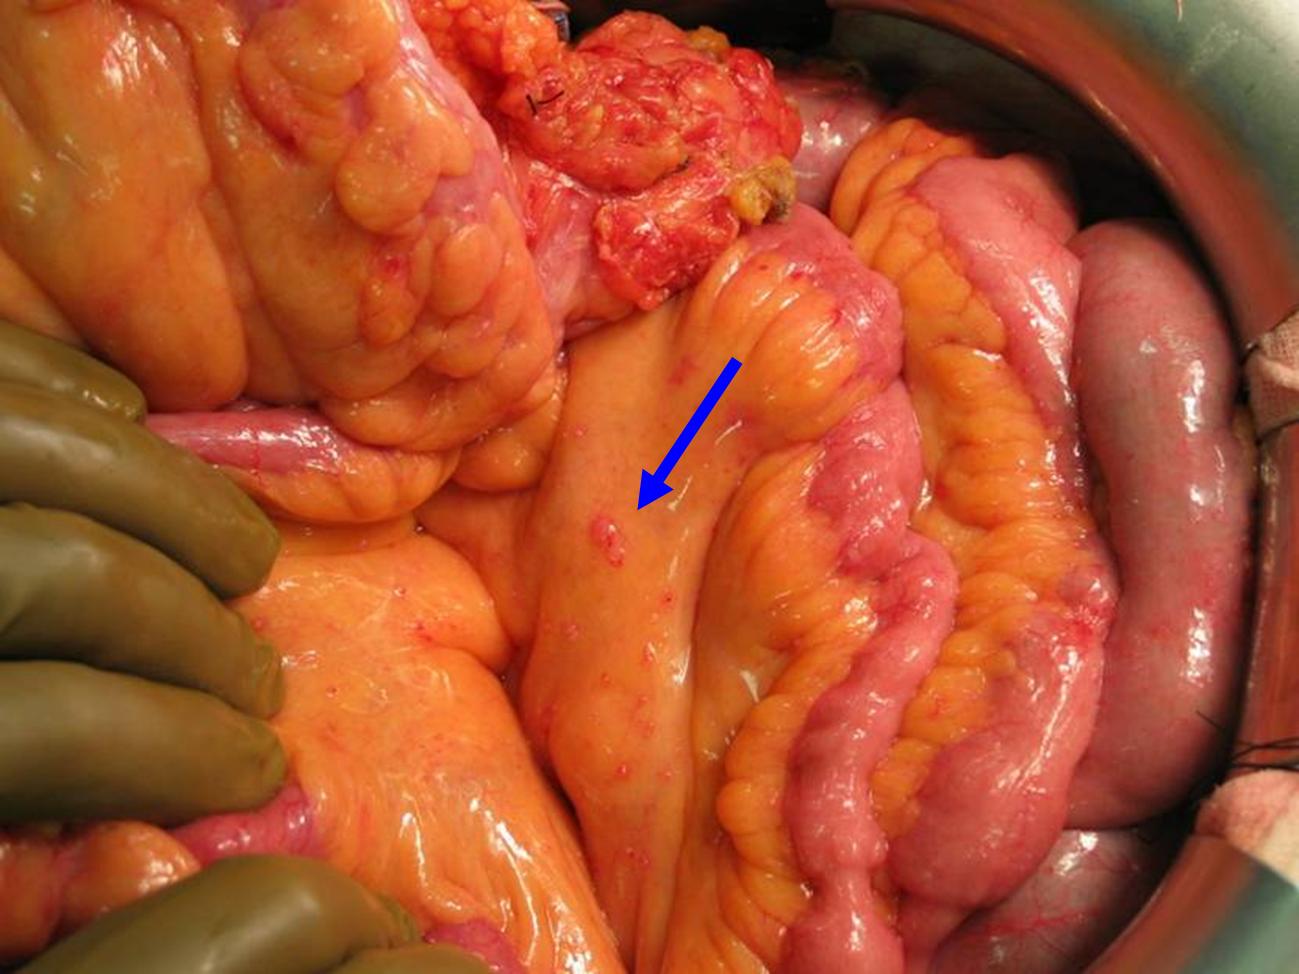 peritoneal cancer bowel)